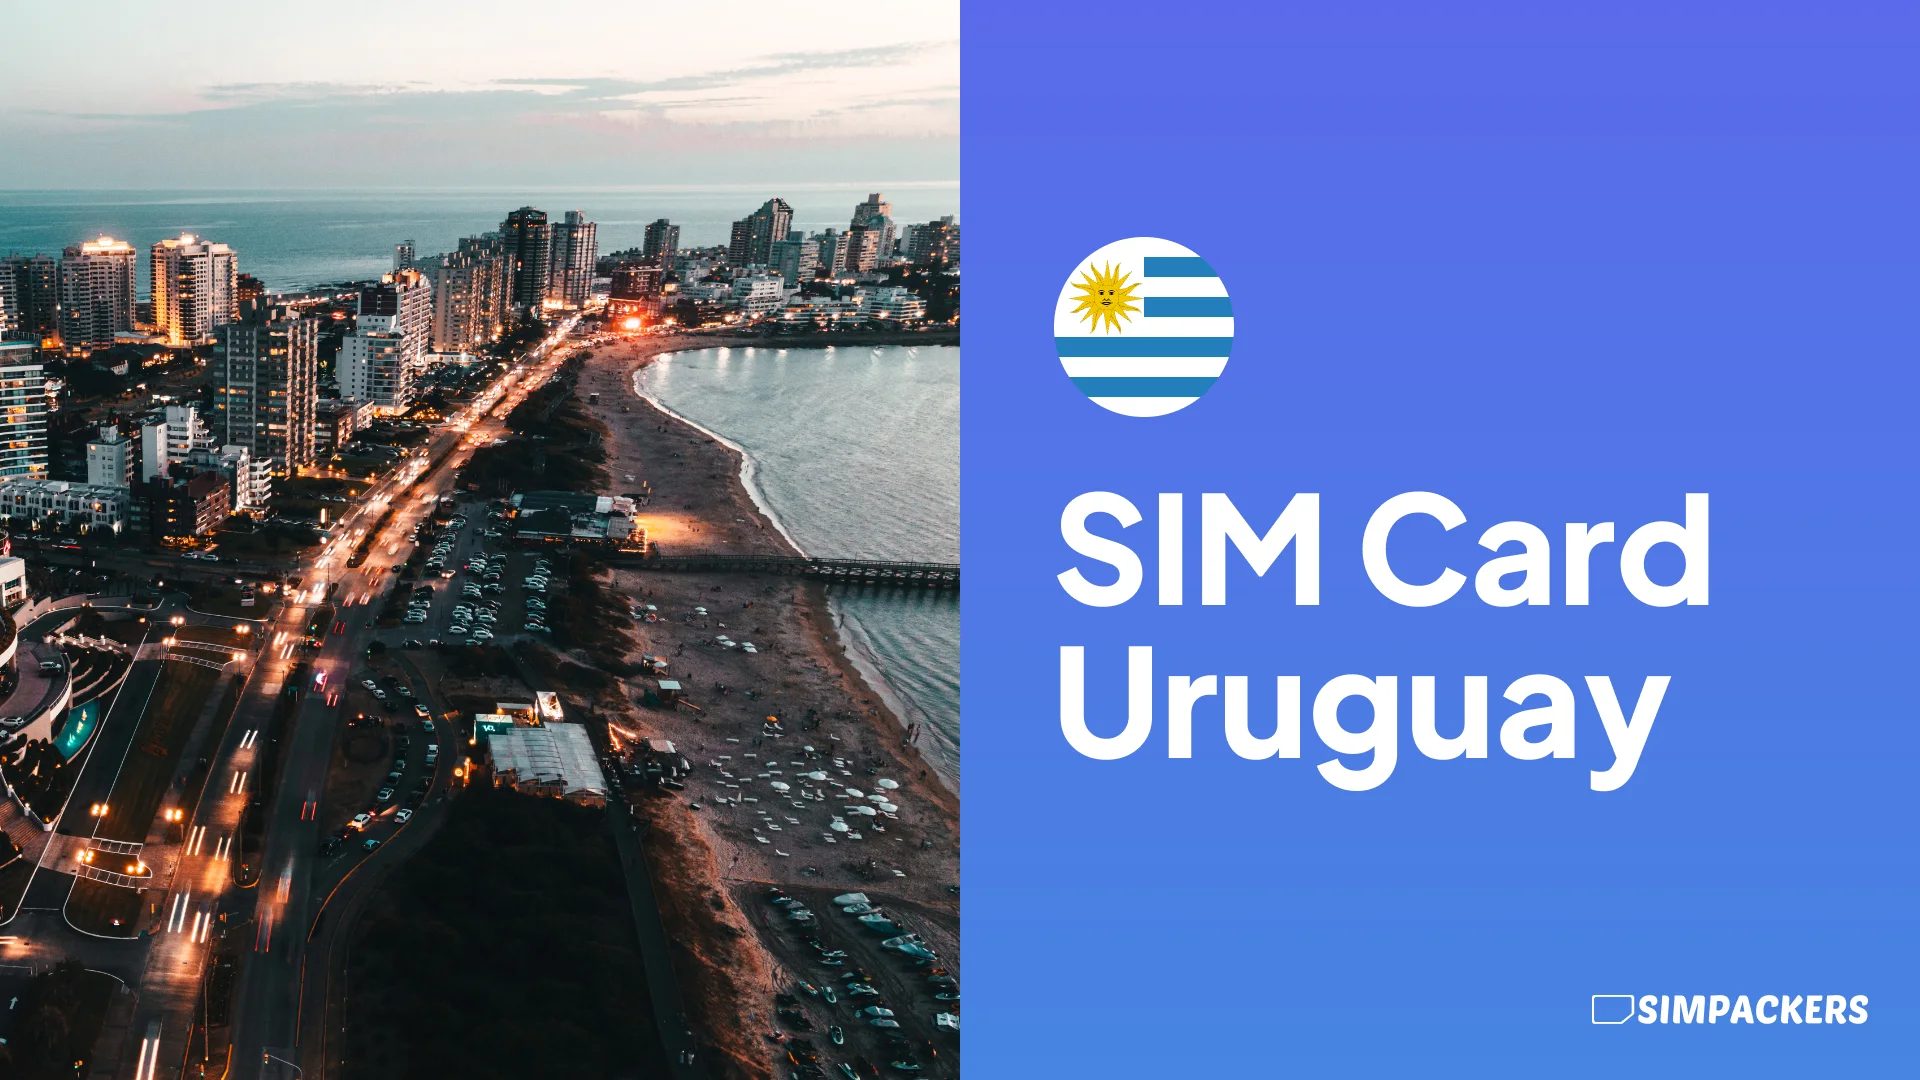 EN/FEATURED_IMAGES/sim-card-uruguay.webp